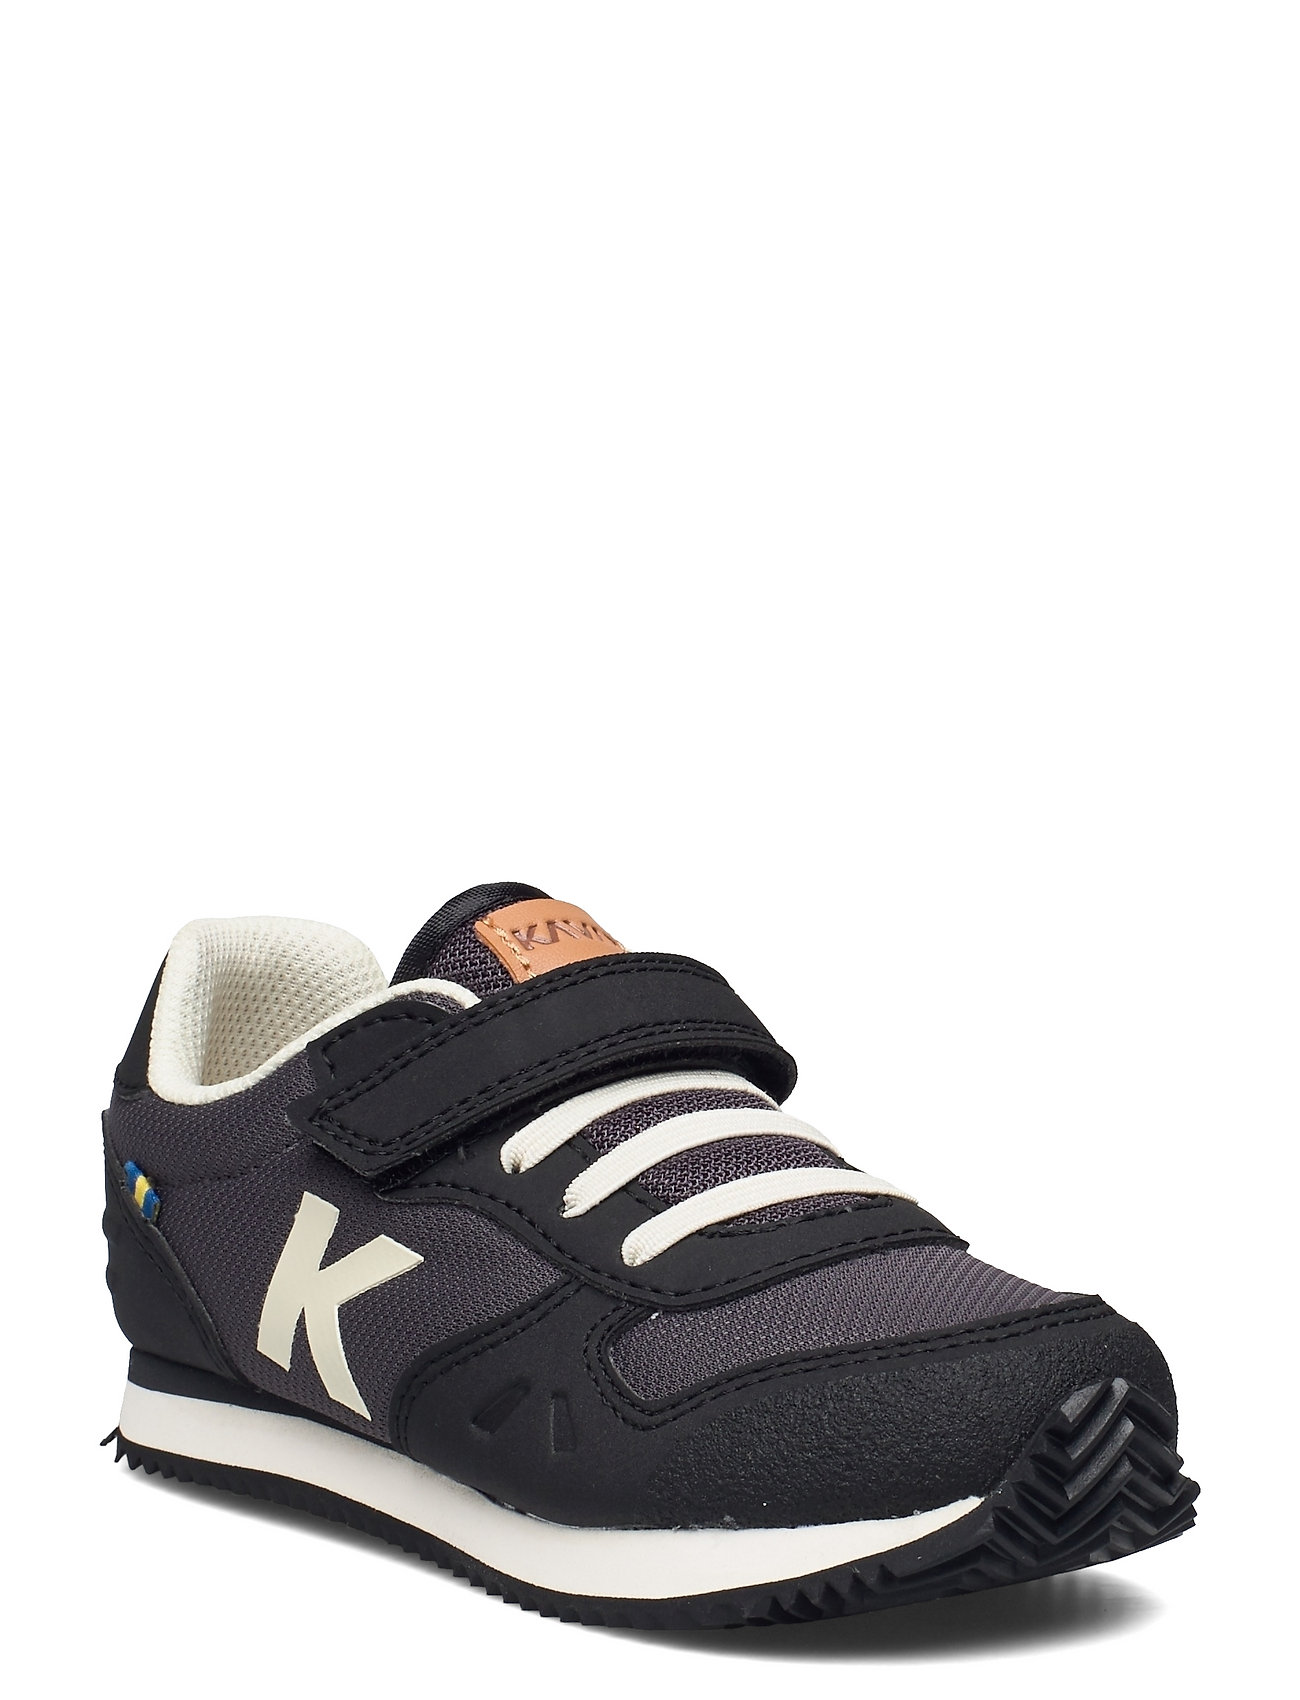 Kavat Tx - sneakers Boozt.com